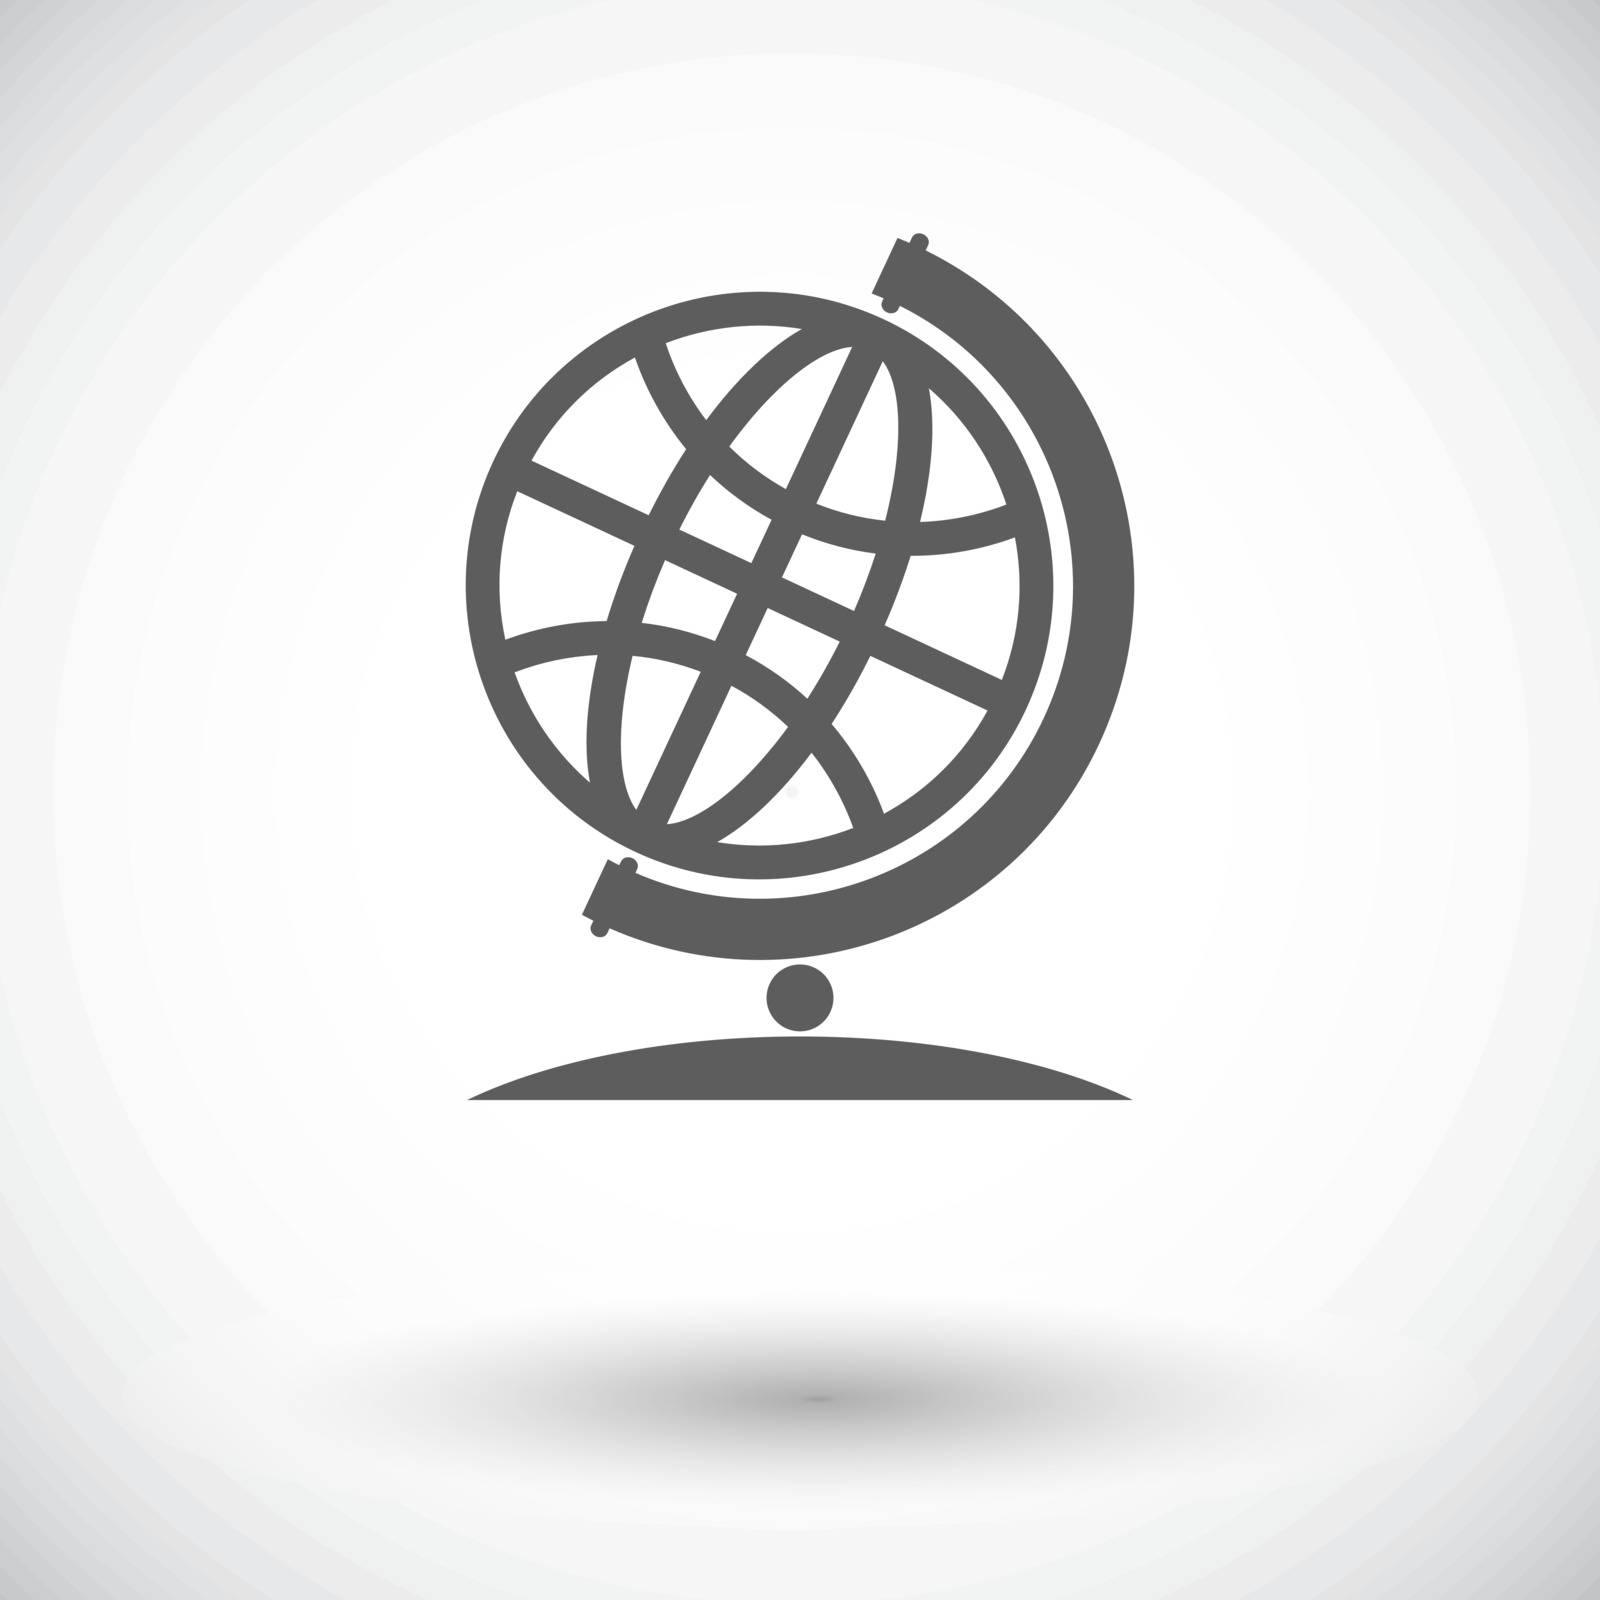 School globe. Single flat icon on white background. Vector illustration.